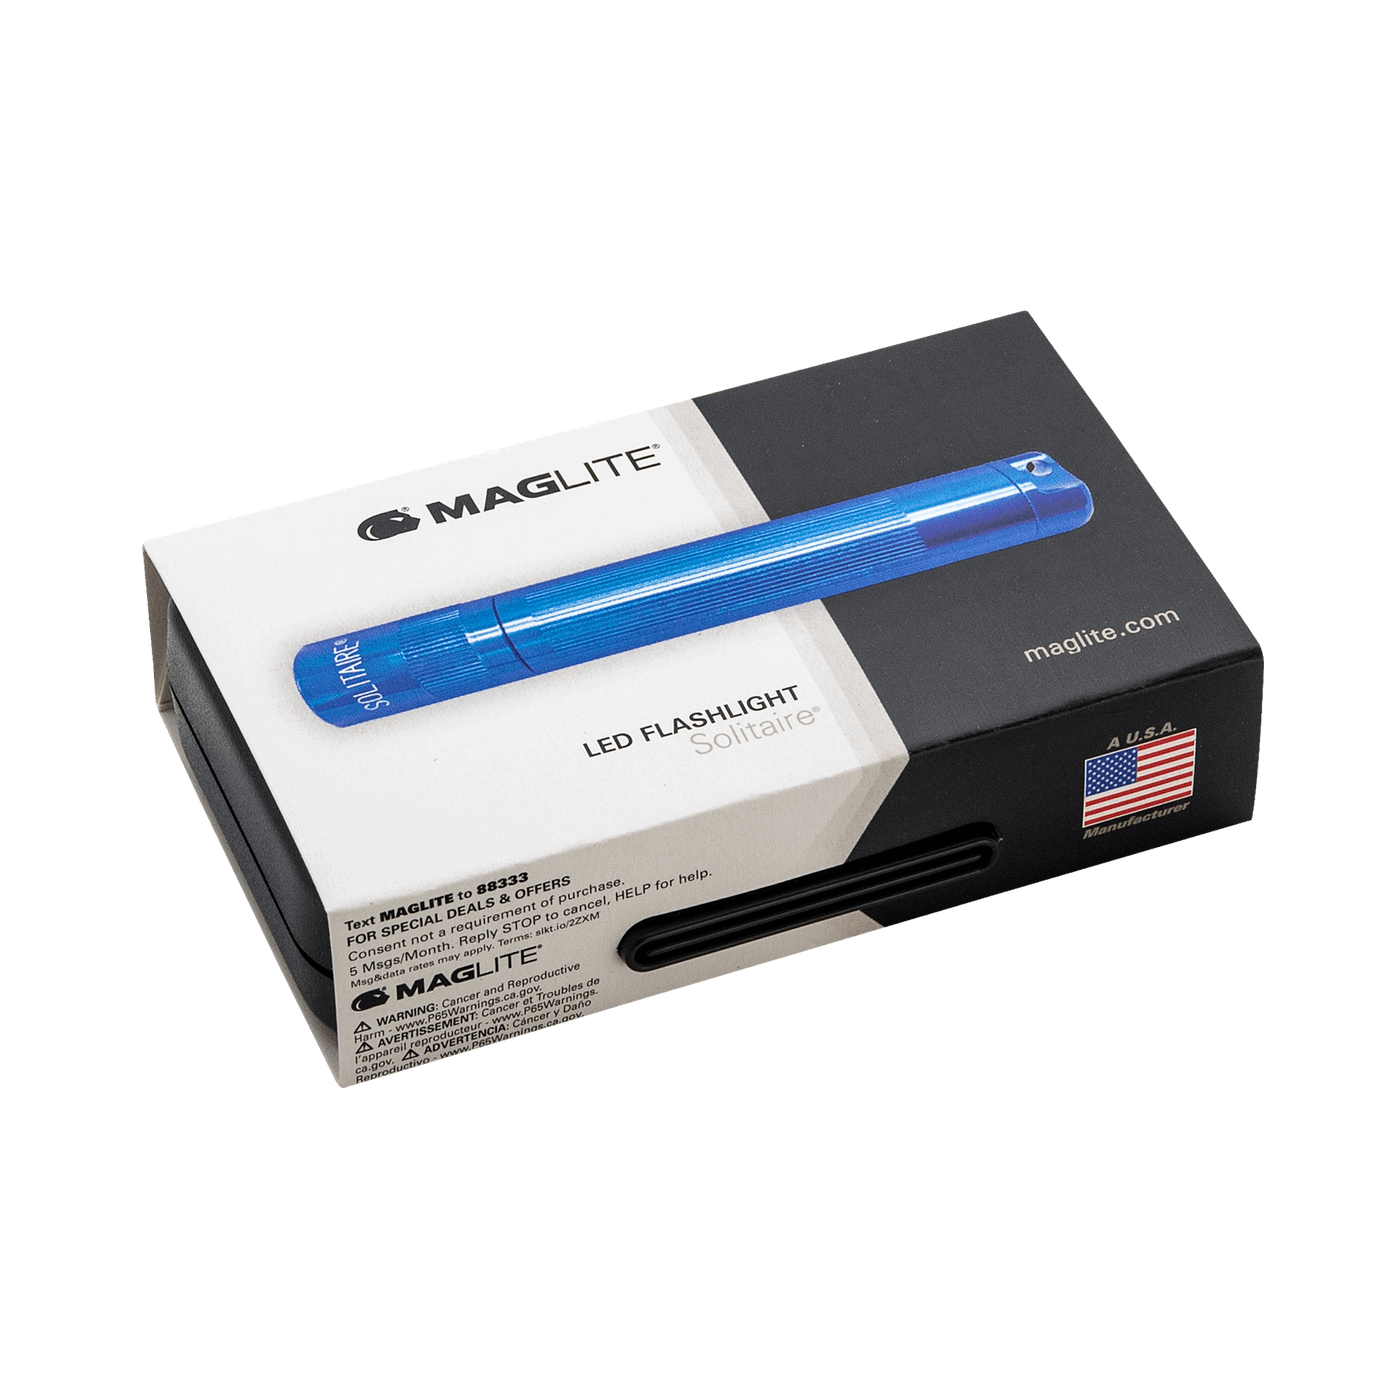 Maglite Solitaire LED - Be Mine - Key Chain Flashlight Blue